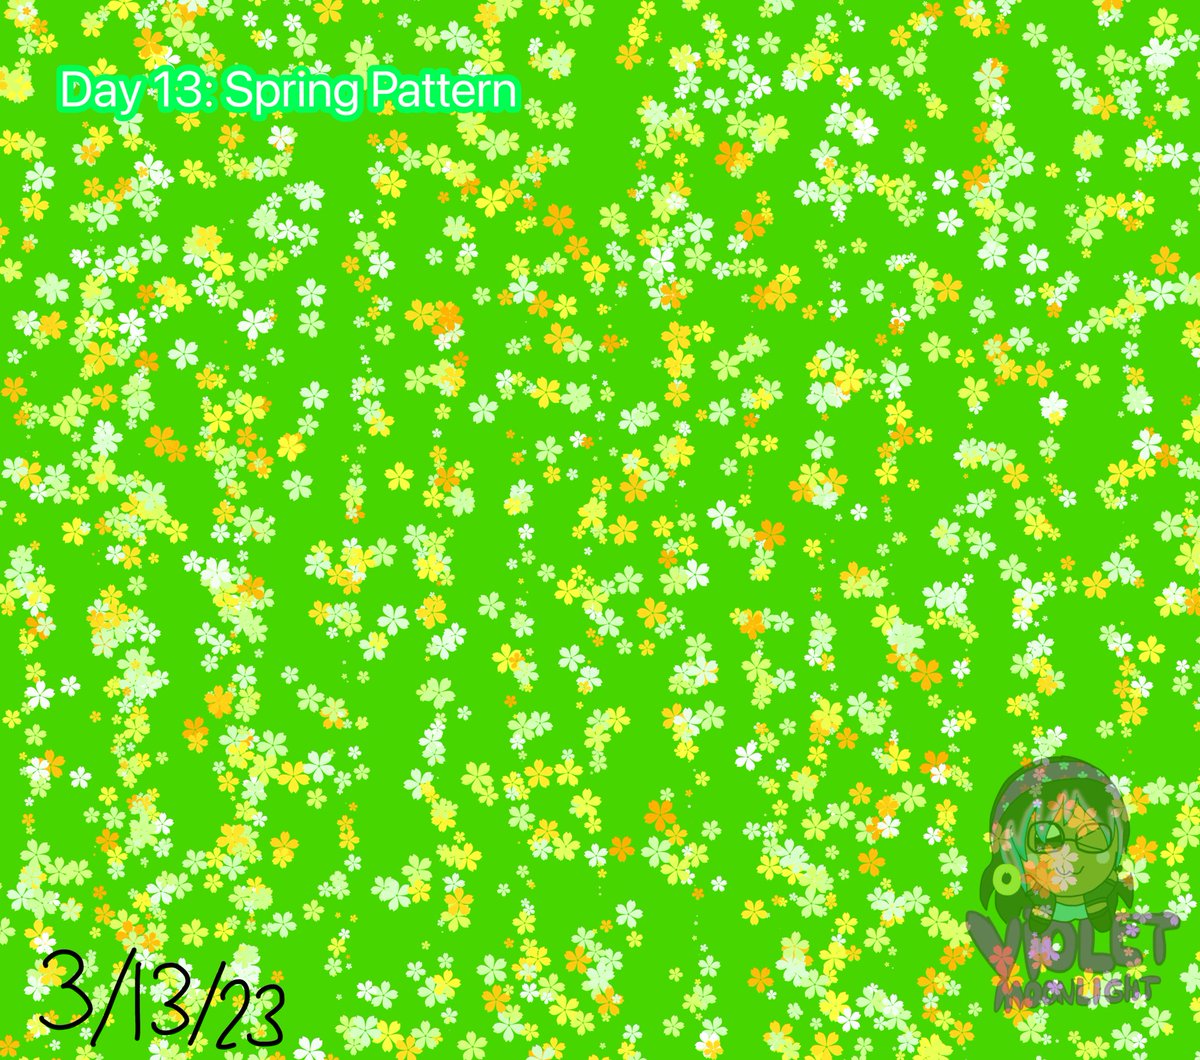 Day 13: Spring Pattern 

…

(#AzariaReese #AzariaReesedraws #Azaria_Art #violetmoonlight) 

#marchdoodlechallenge 

#springpattern #march #green #drawing #digitalart #ibisPaintX #ArtistOnTwitter